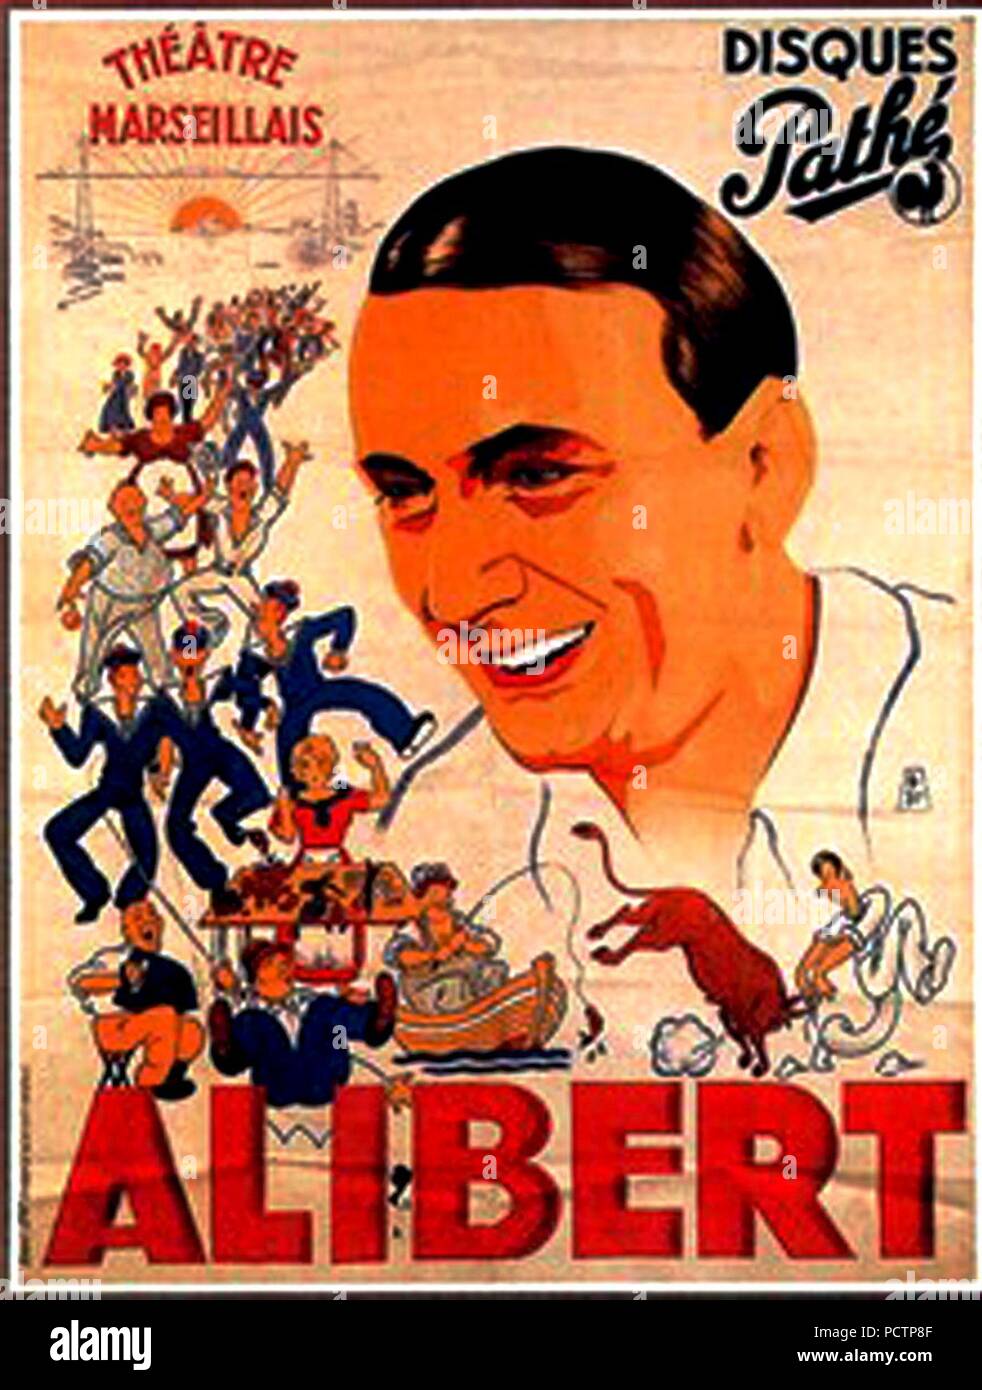 Alibert Affiche de Pol Rob 1937. Stockfoto